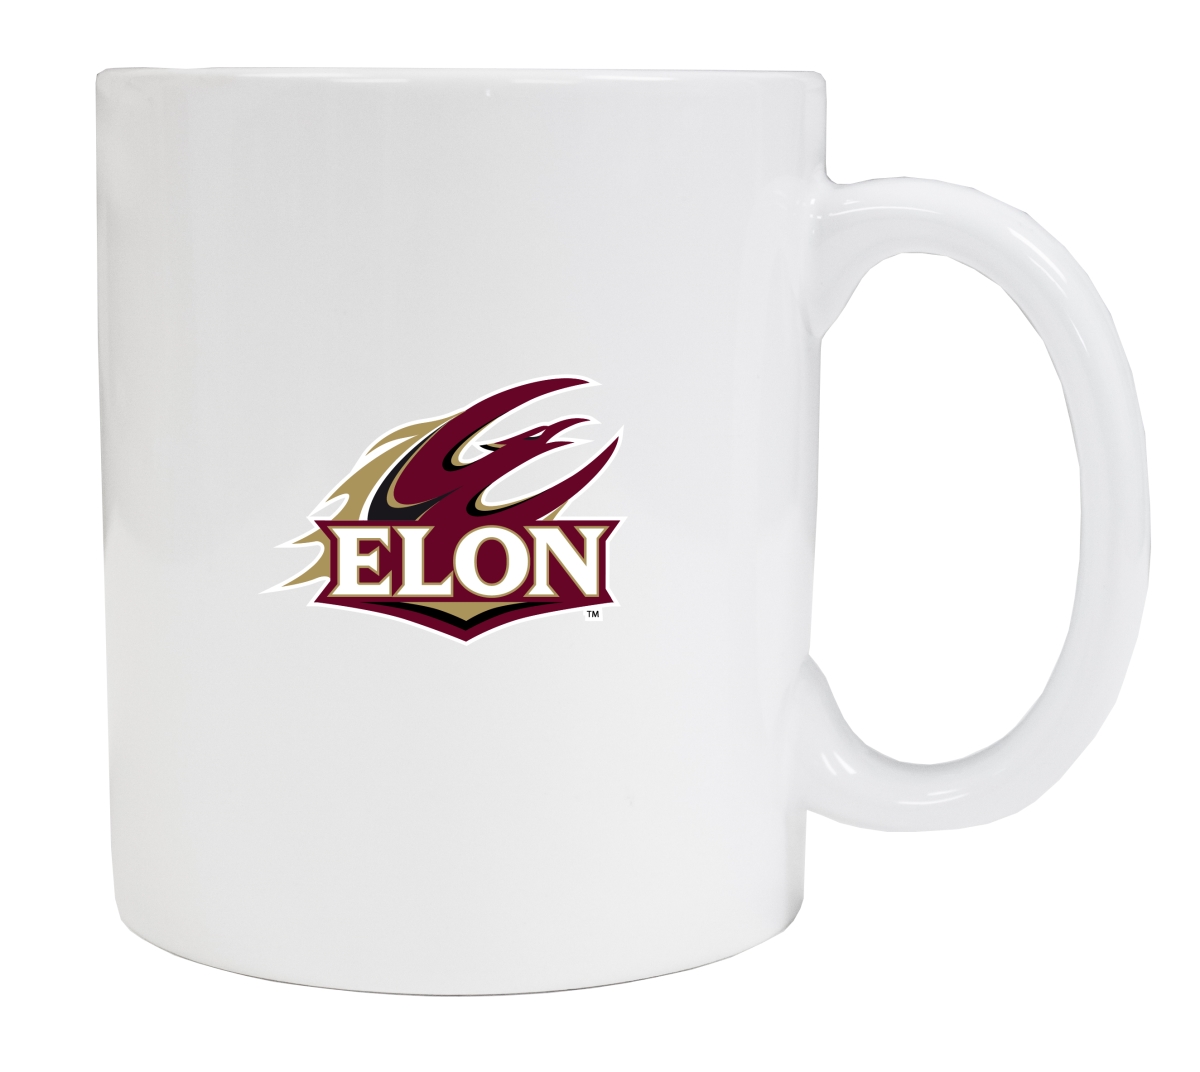 Picture of R & R Imports MUG2-C-ELON19 W Elon University White Ceramic Coffee Mug - Pack of 2